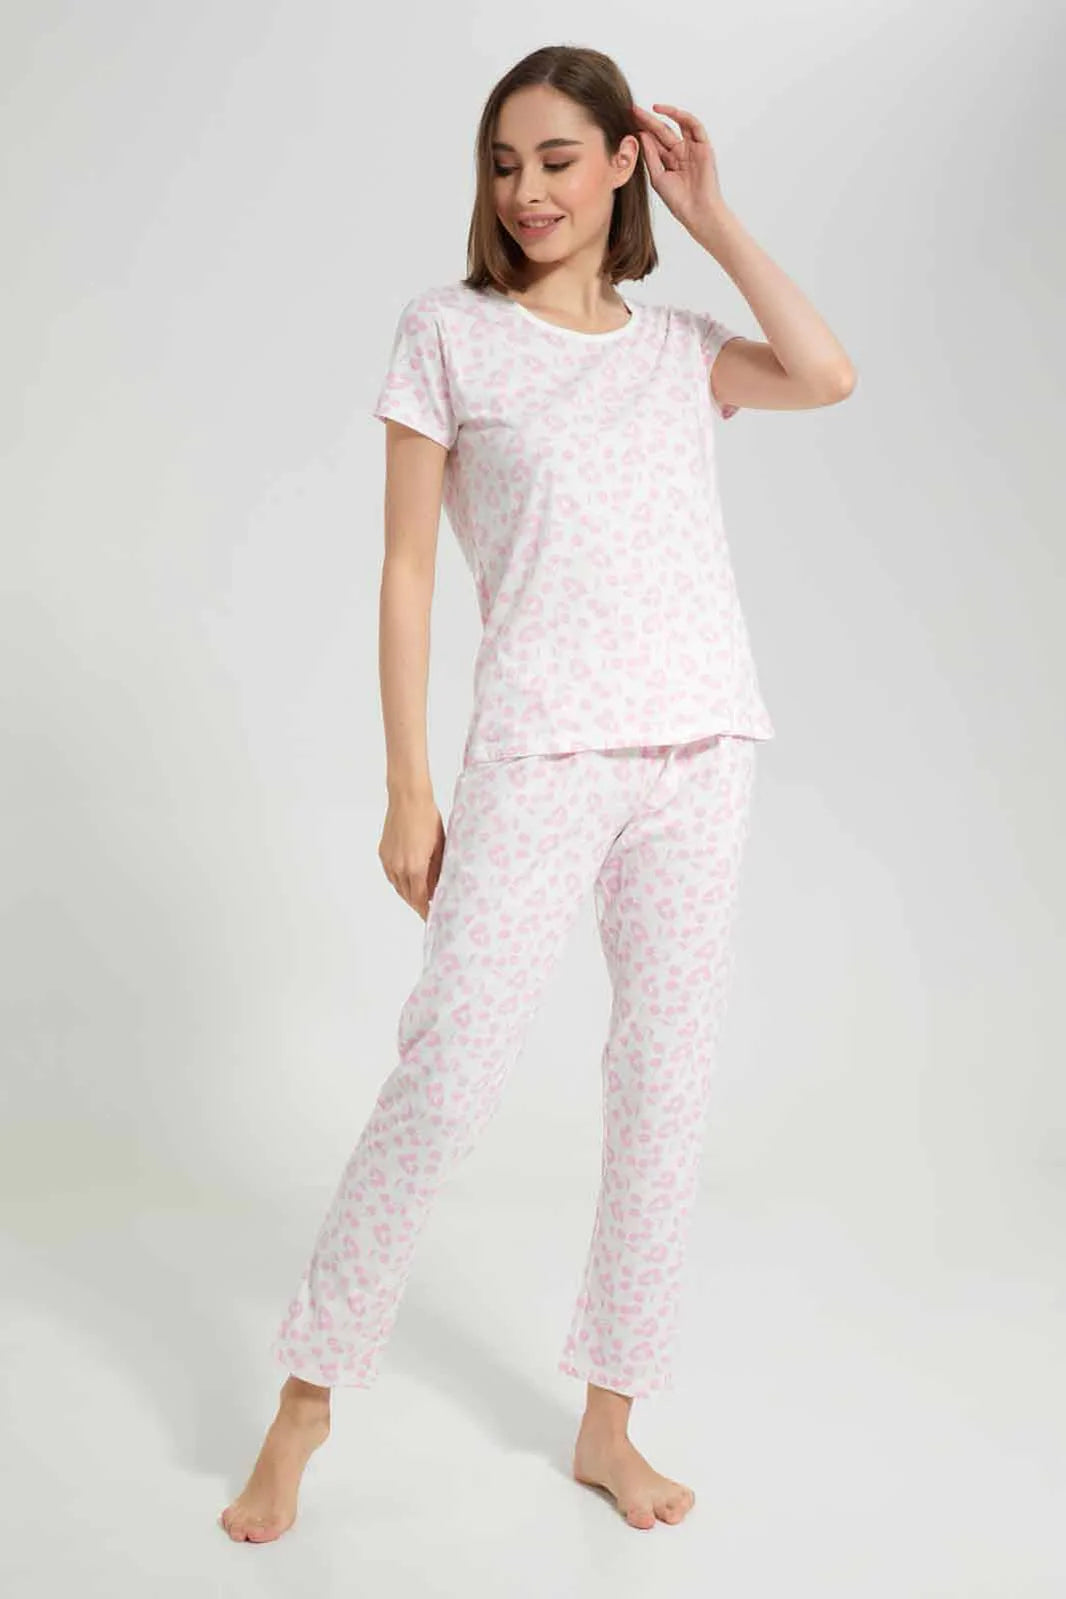 Pyjamas - Buy Pyjamas for Women Online in Saudi Arabia